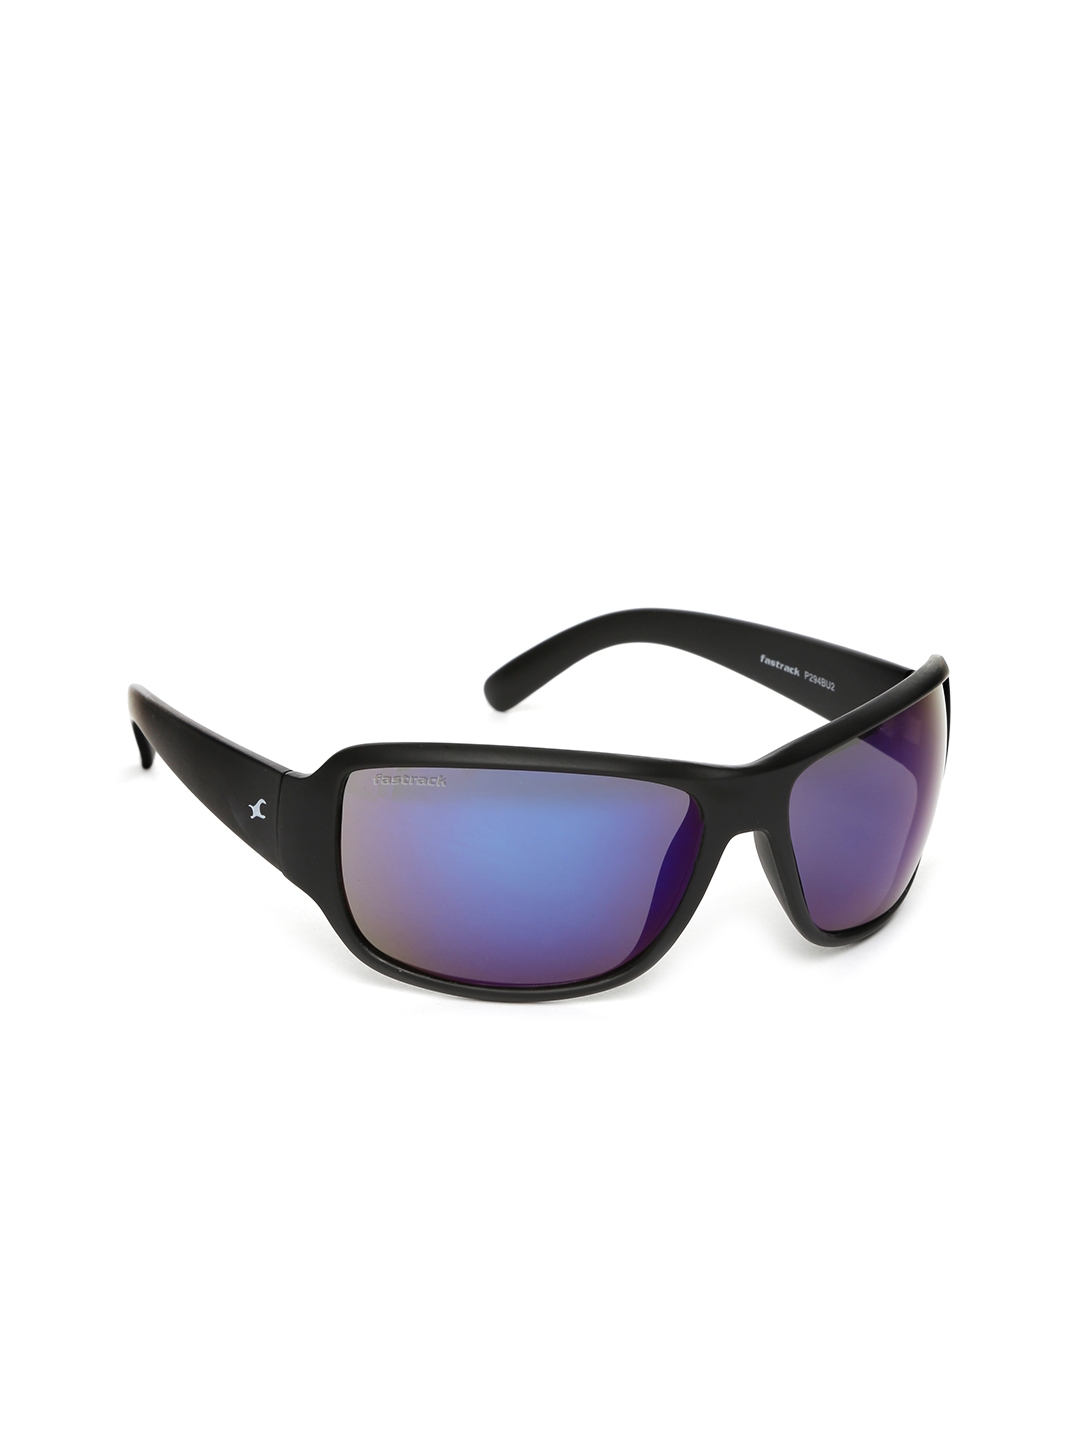 Buy Fastrack Men's Gradient Black Lens Square Sunglasses at Amazon.in